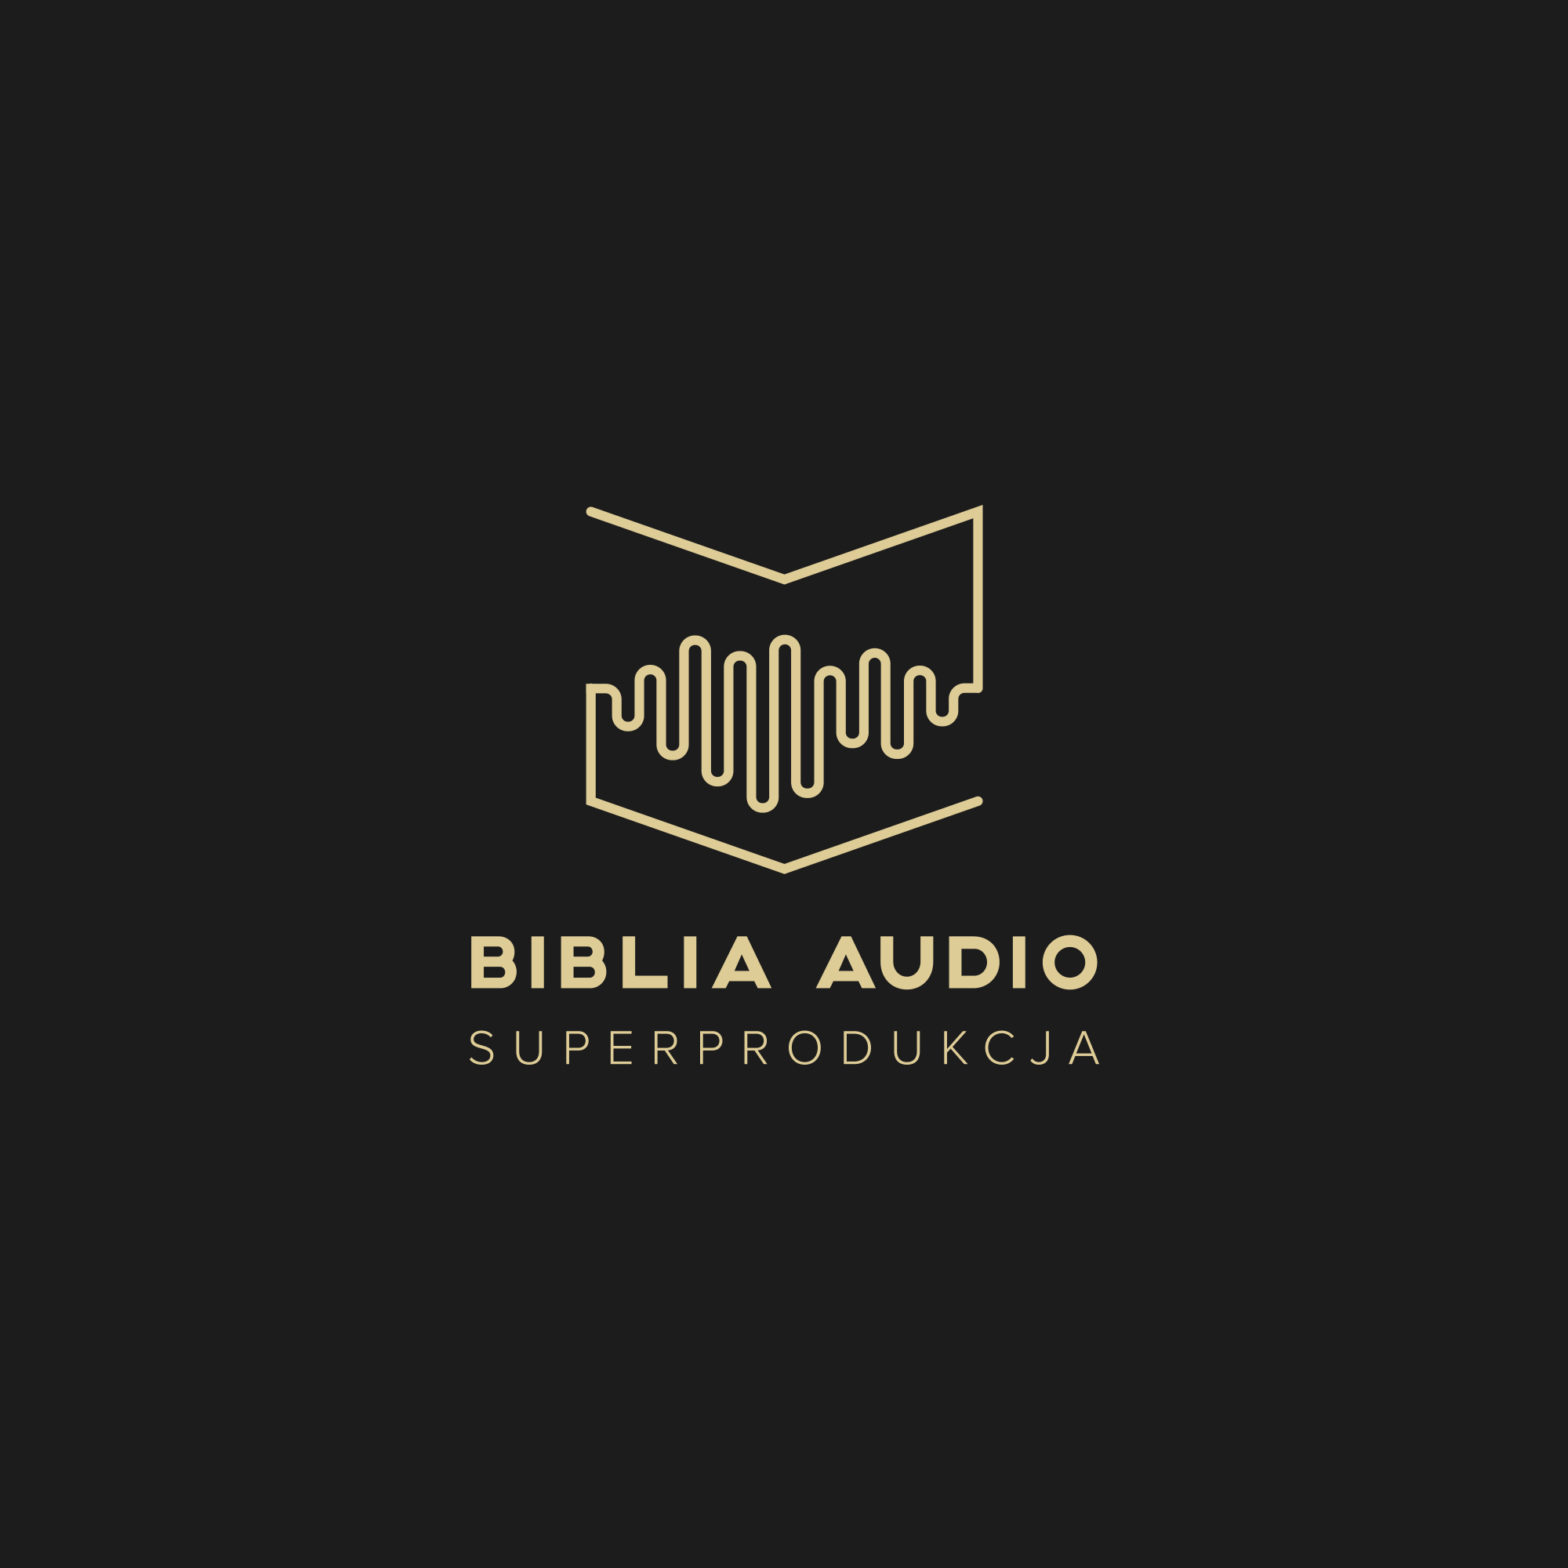 Biblia Audio Superprodukcja